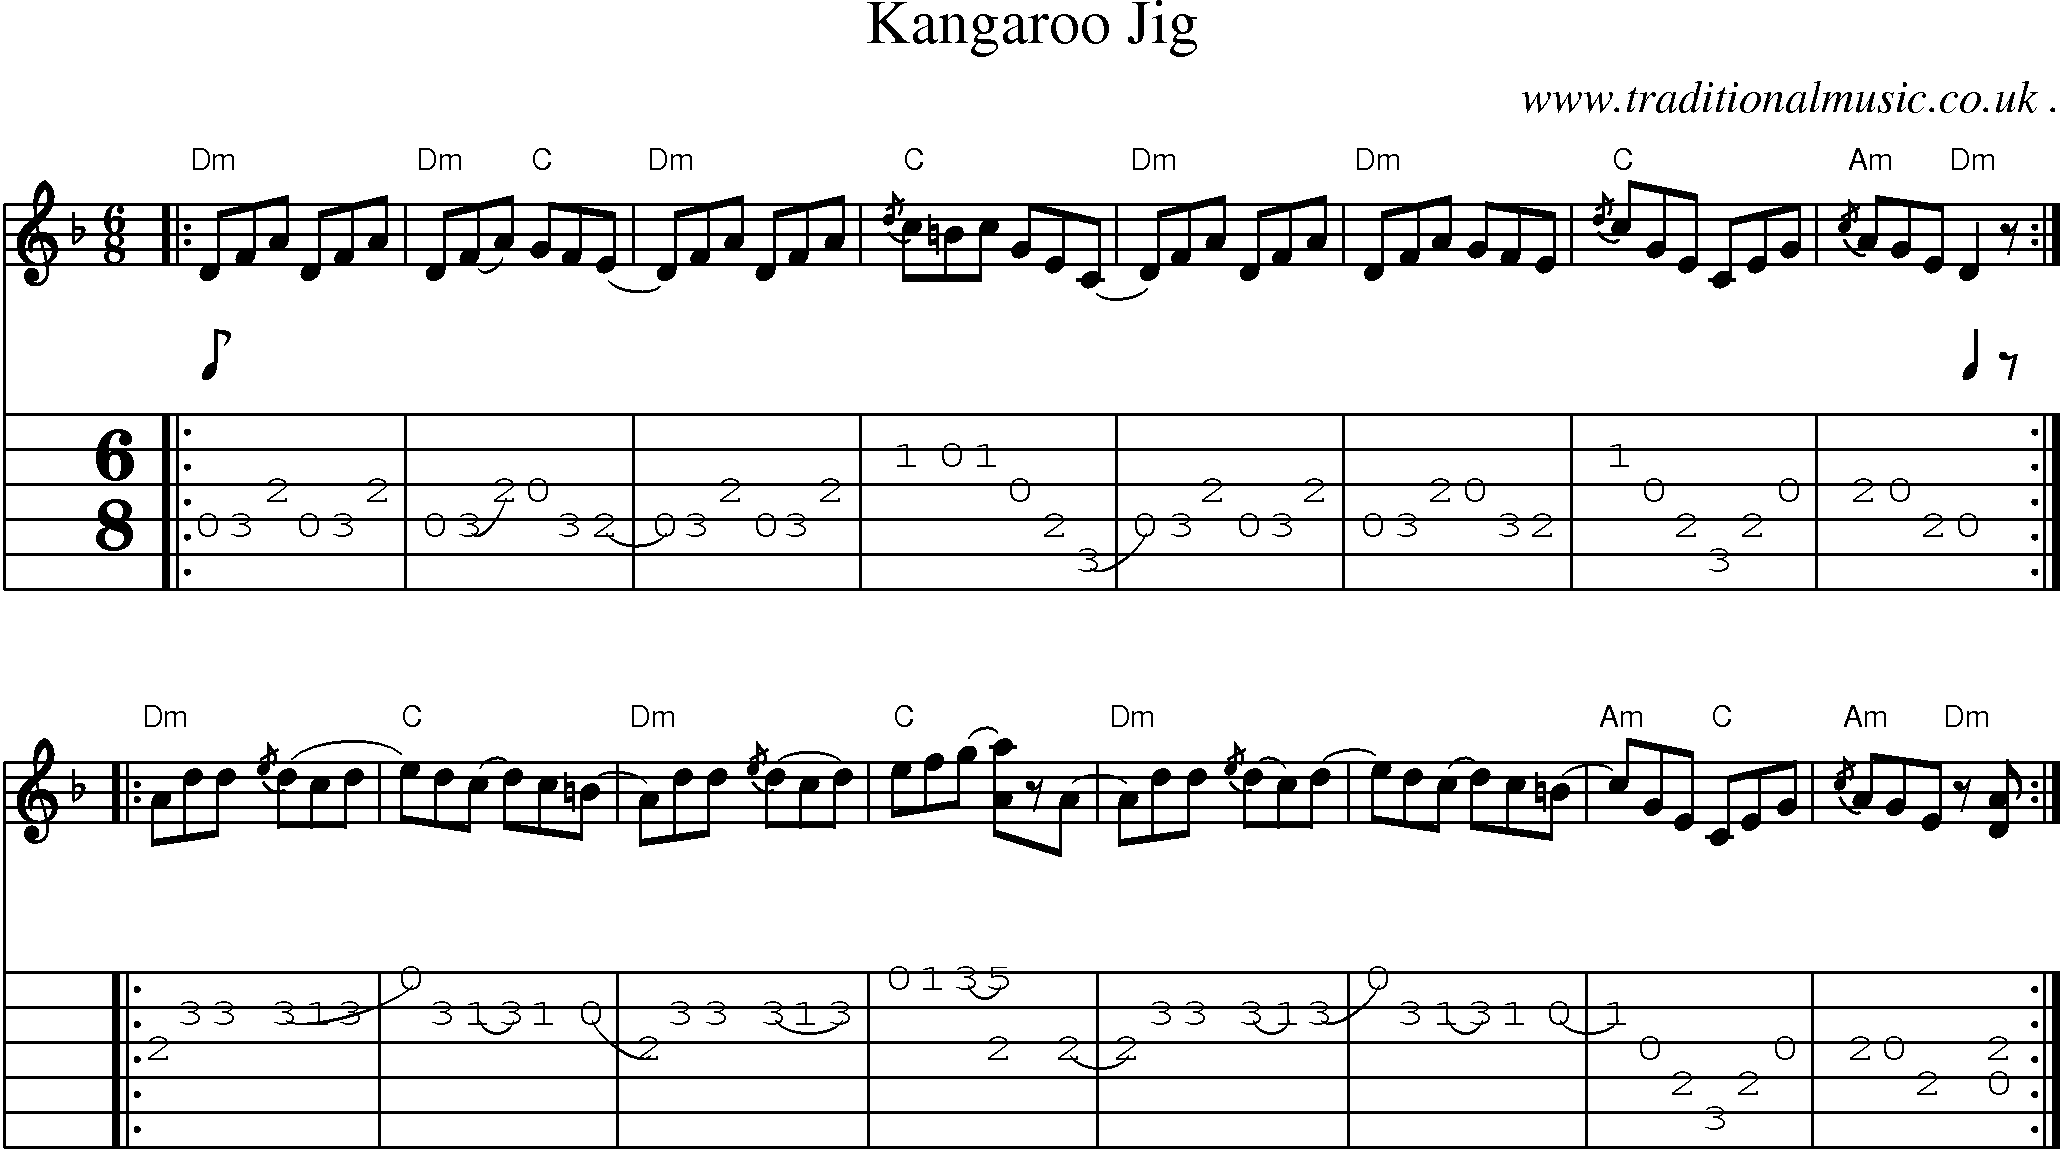 Sheet-music  score, Chords and Guitar Tabs for Kangaroo Jig